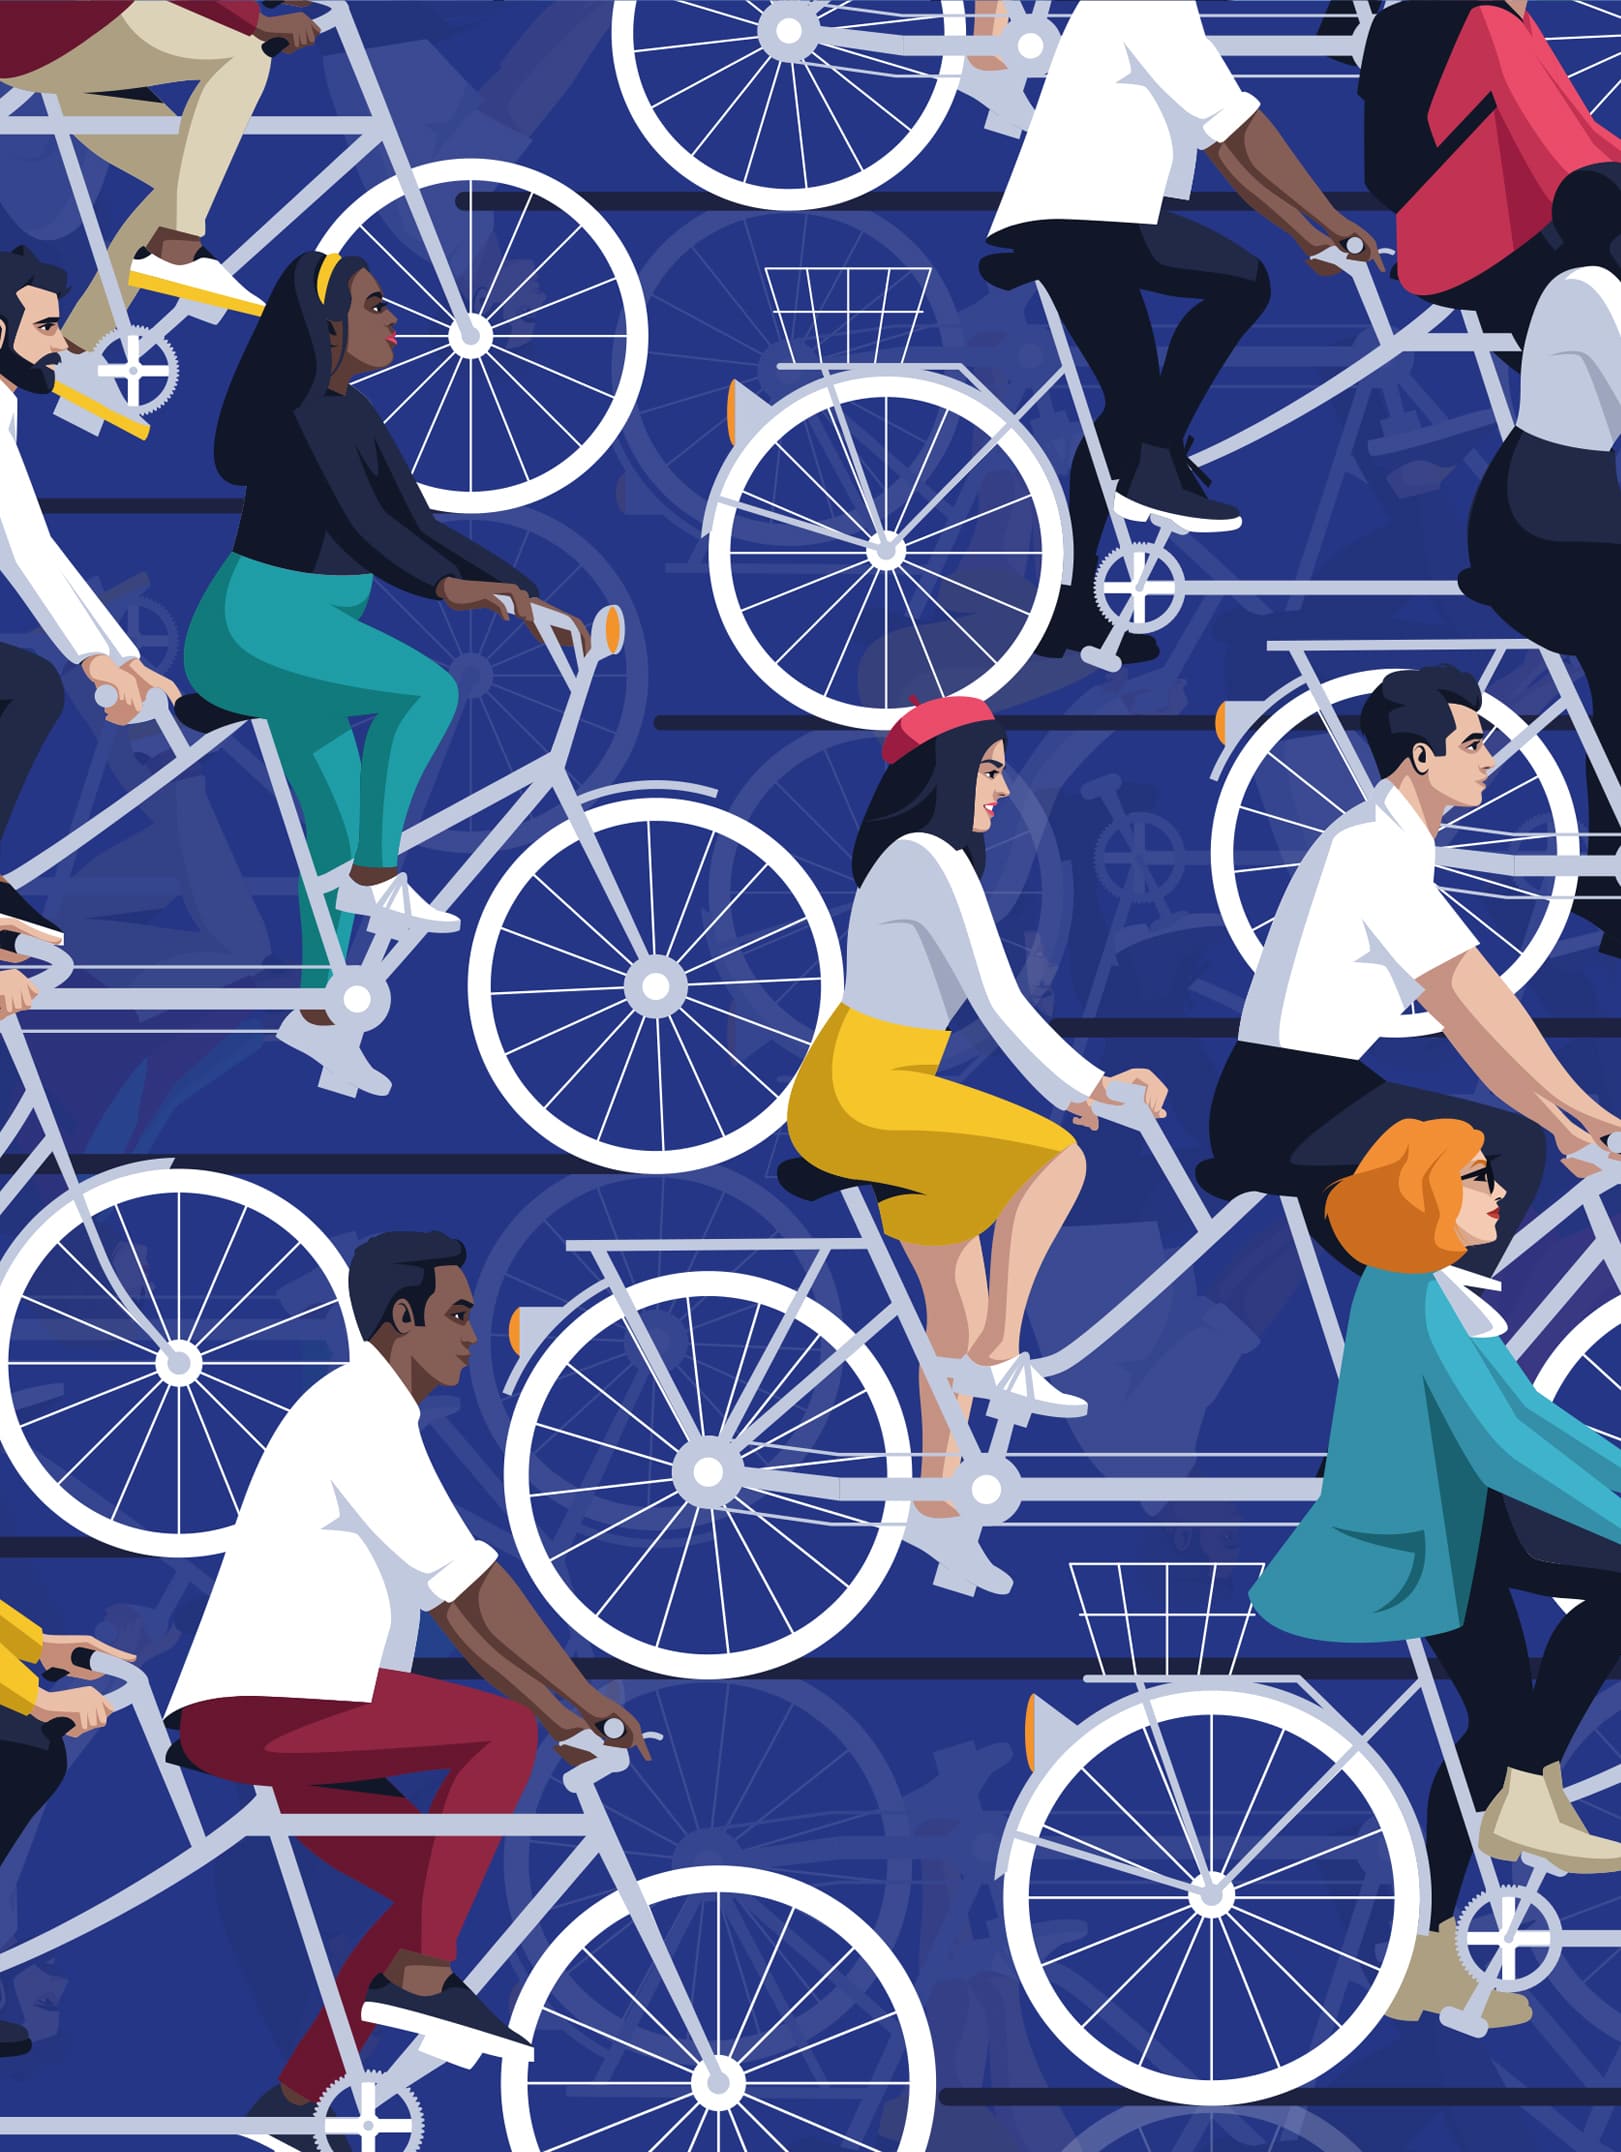 Ilustración para la Comisión Europea de España - Ciclistas diversos con fondo azul